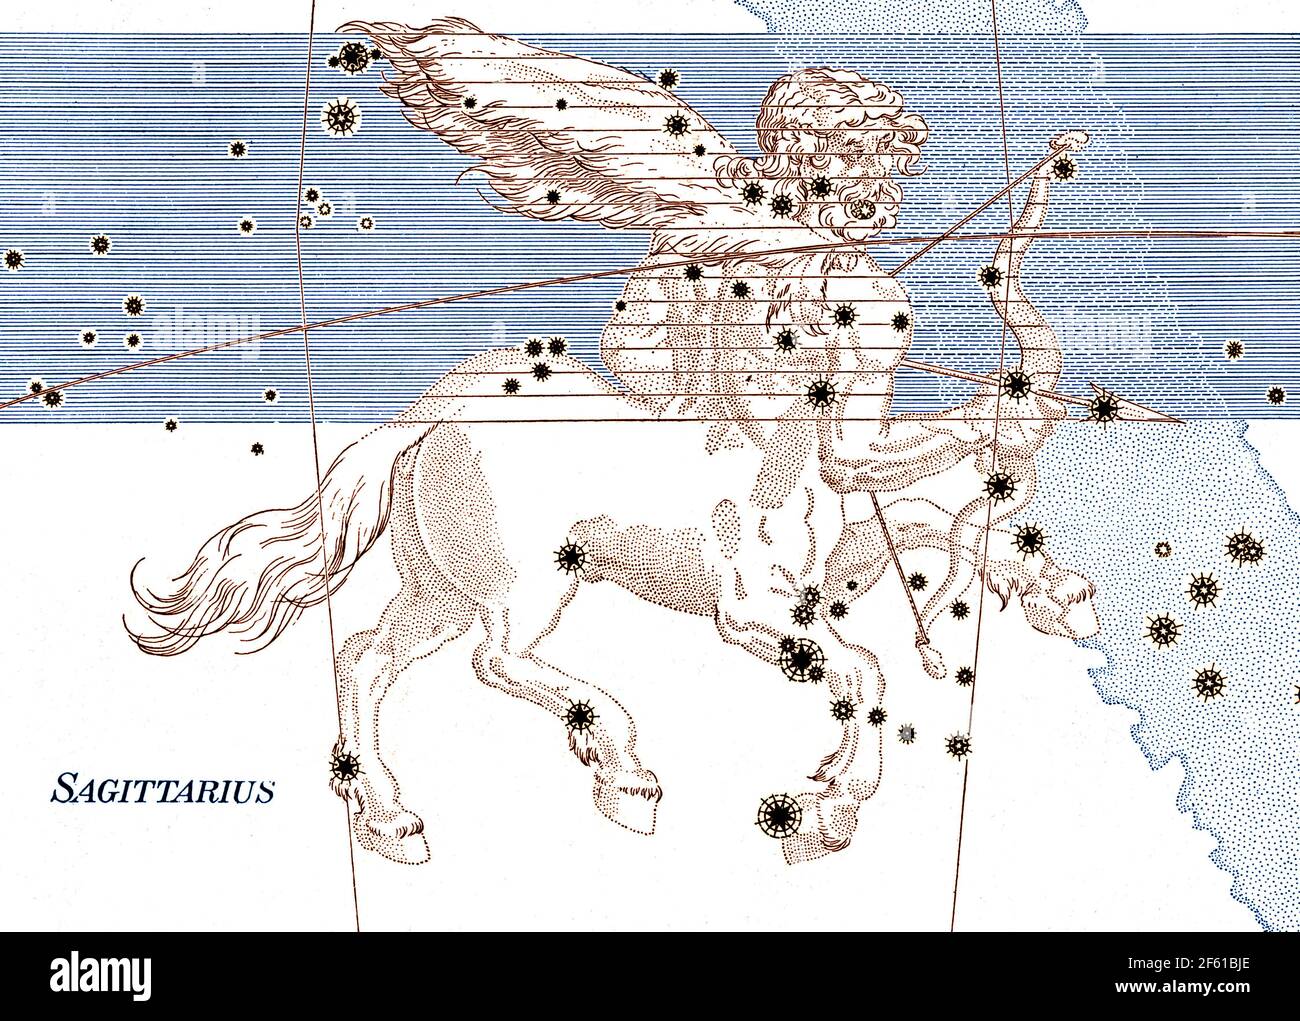 Sagittarius Constellation, Zodiac Sign, Bayer Stock Photo